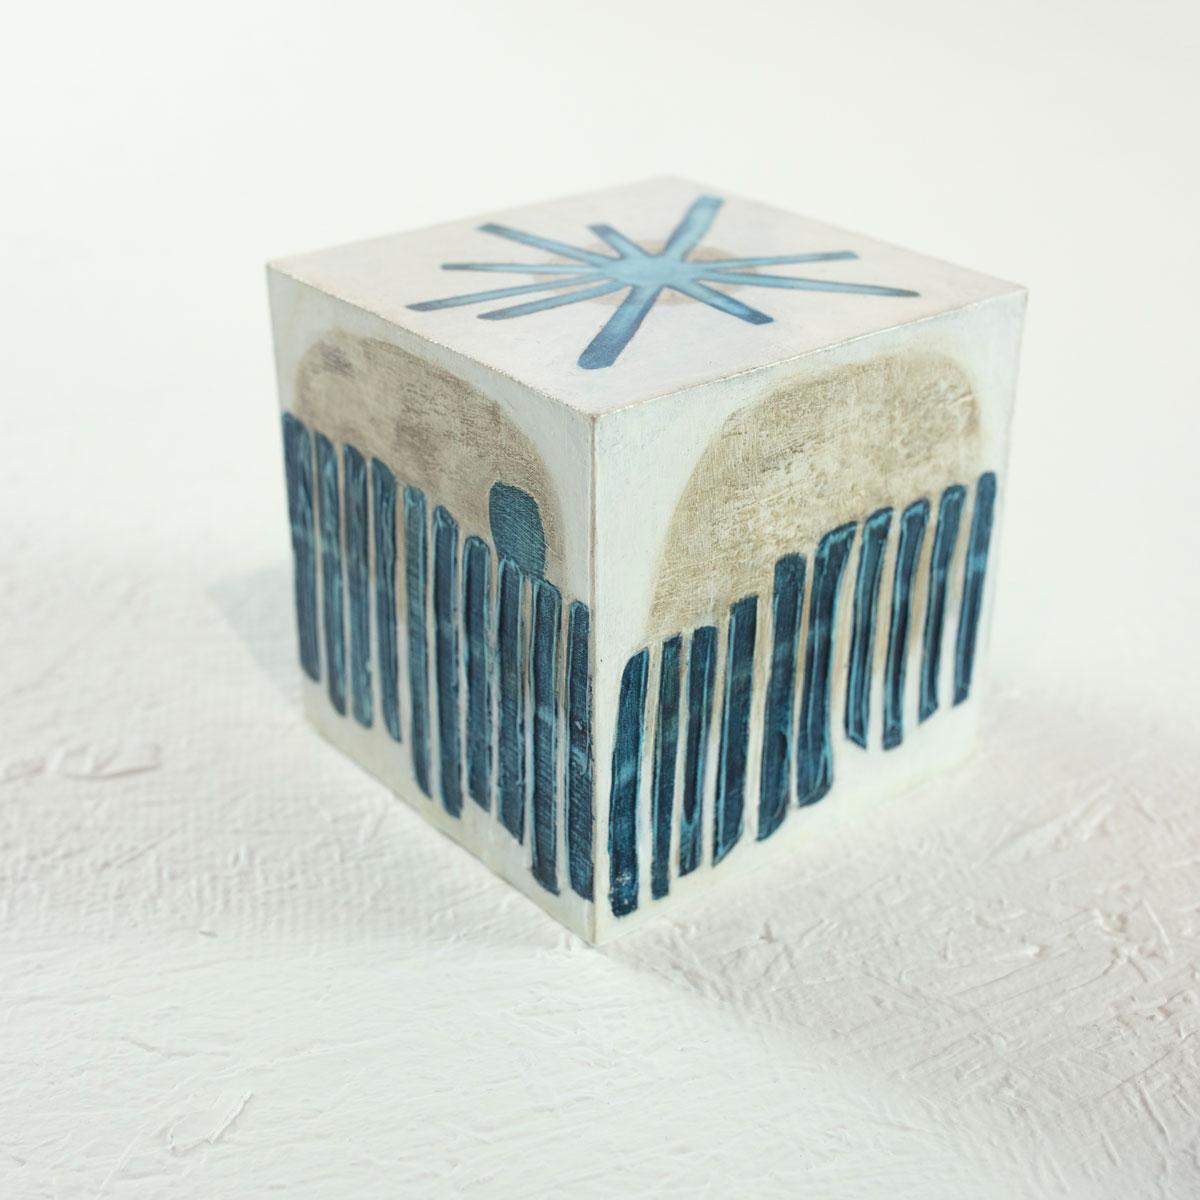 "Little Swann 1" Painted Wooden Cube Sculpture